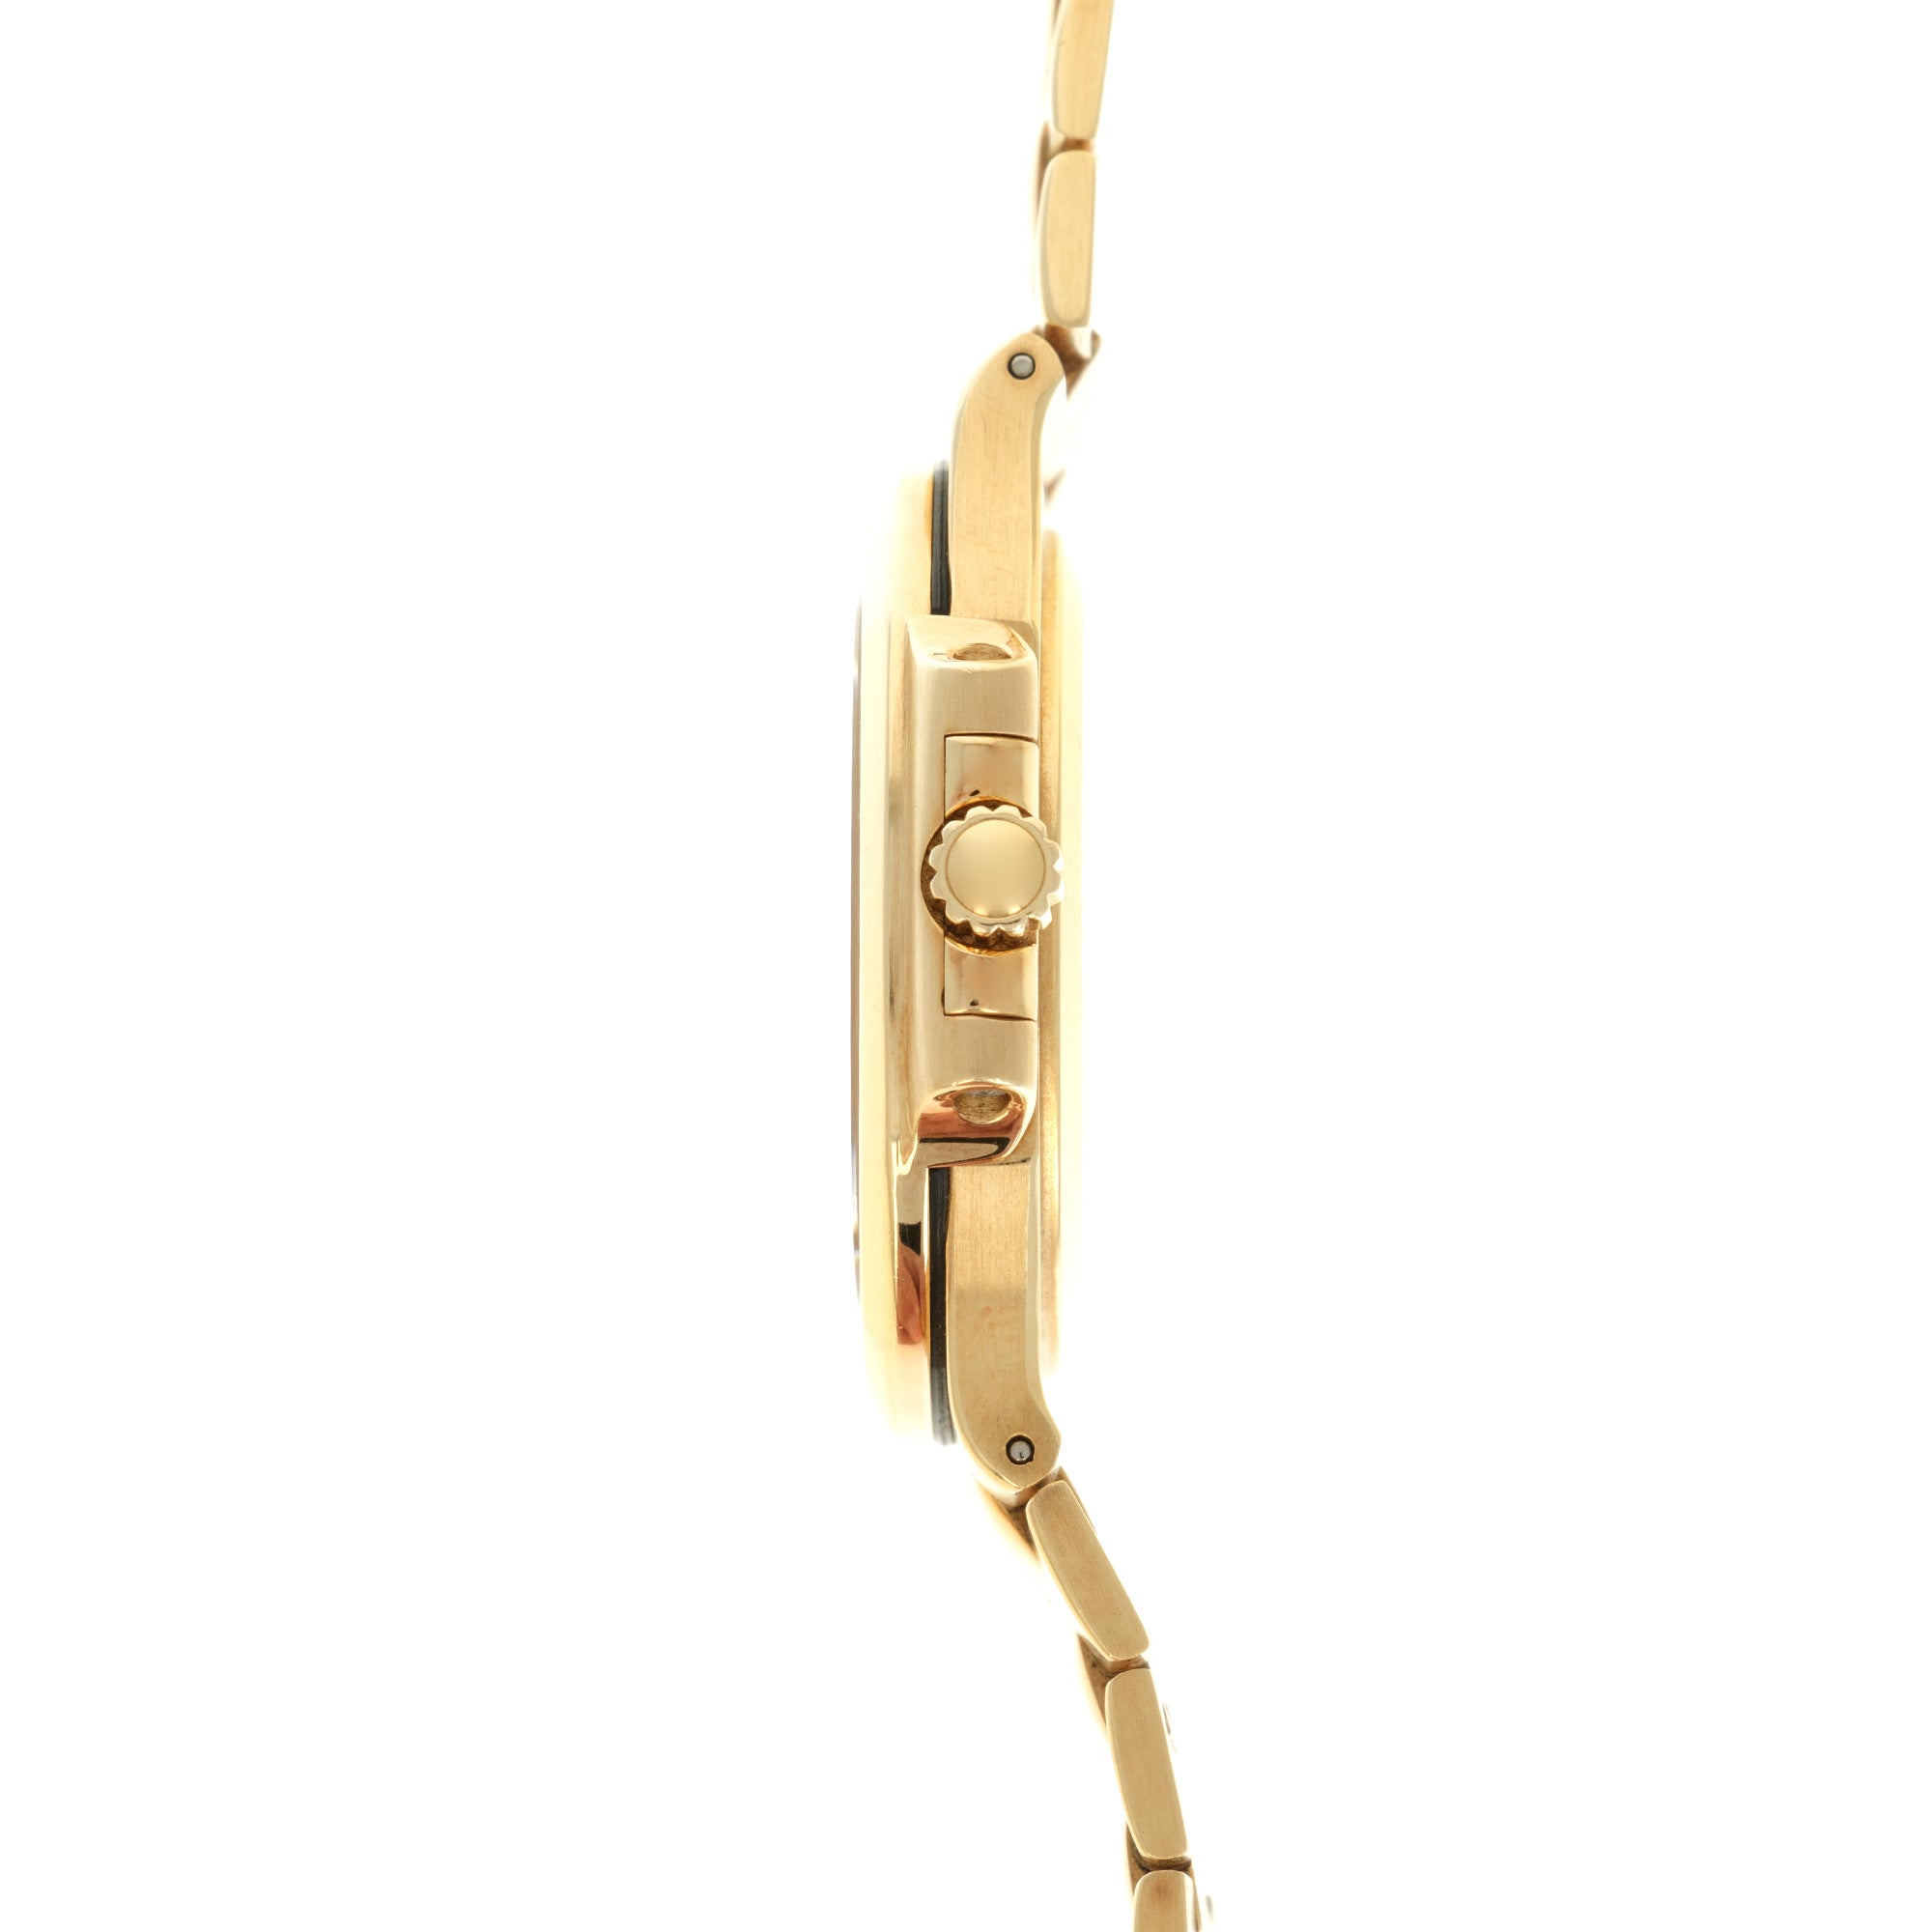 Patek Philippe - Patek Philippe Yellow Gold Nautilus Automatic Watch Ref. 3800 - The Keystone Watches